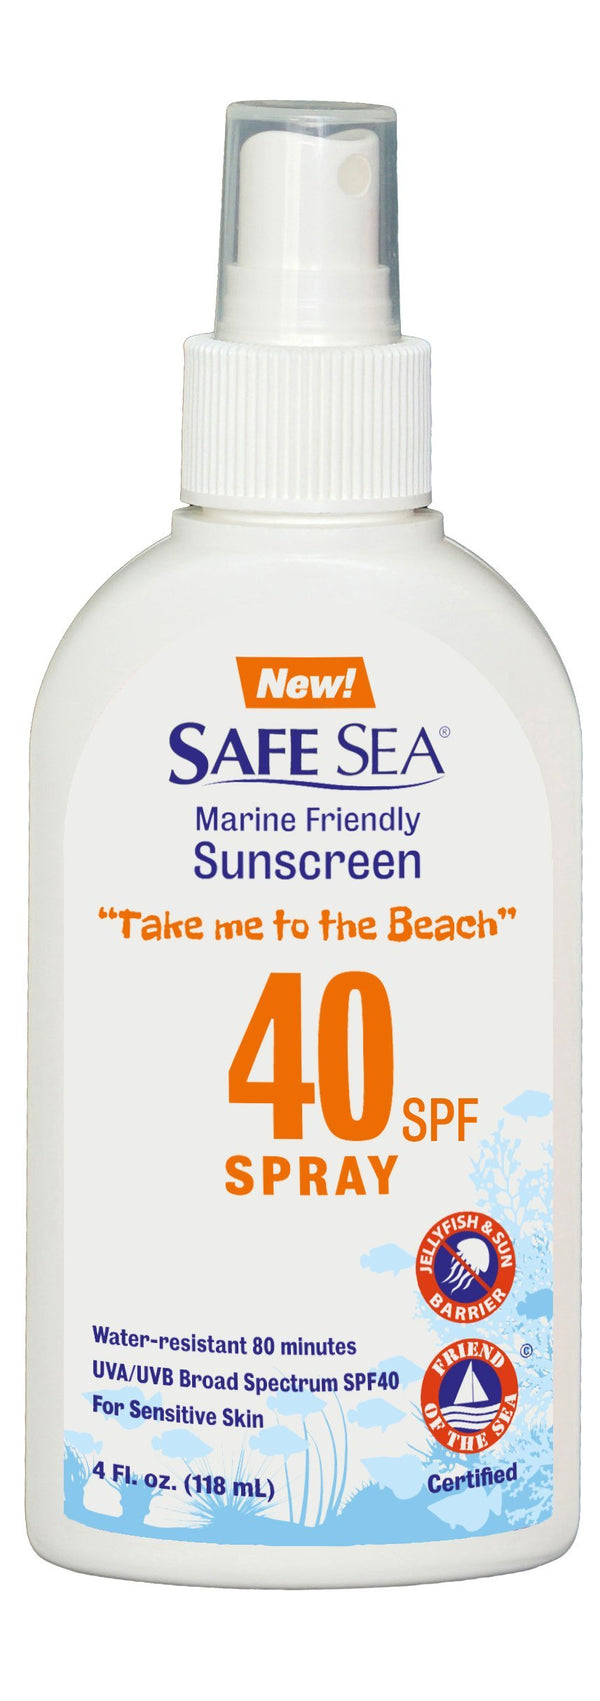 SAFE SEA Anti-jellyfish Sting Protective SPRAY - Sunscreen - Sunblock - Sea Lice - Jelly Fish (SPF40, 4oz Bottle)*04102